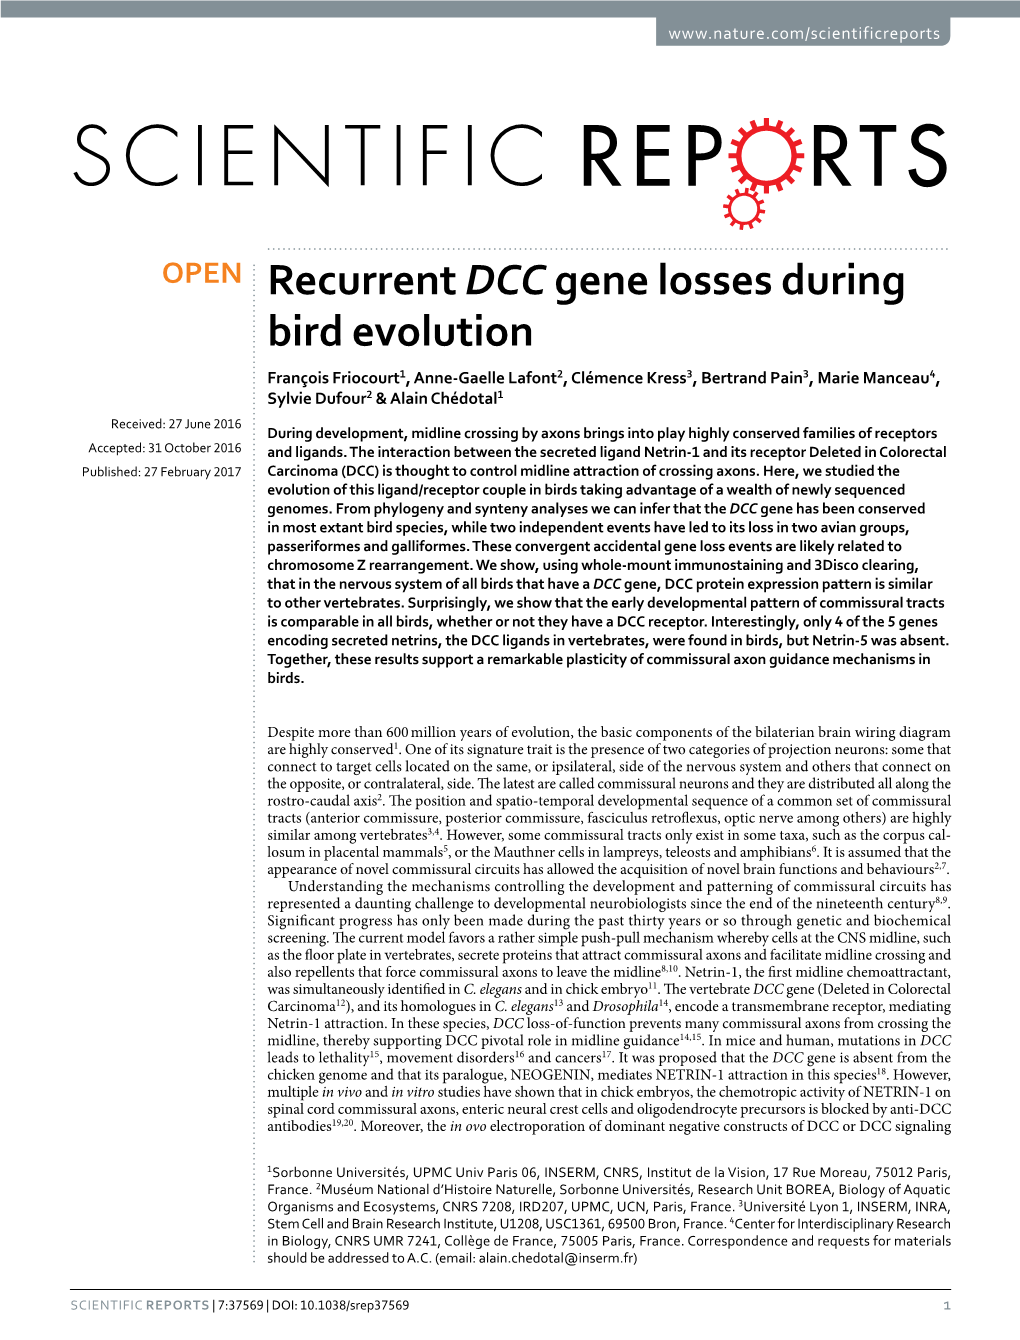 Recurrent DCC Gene Losses During Bird Evolution